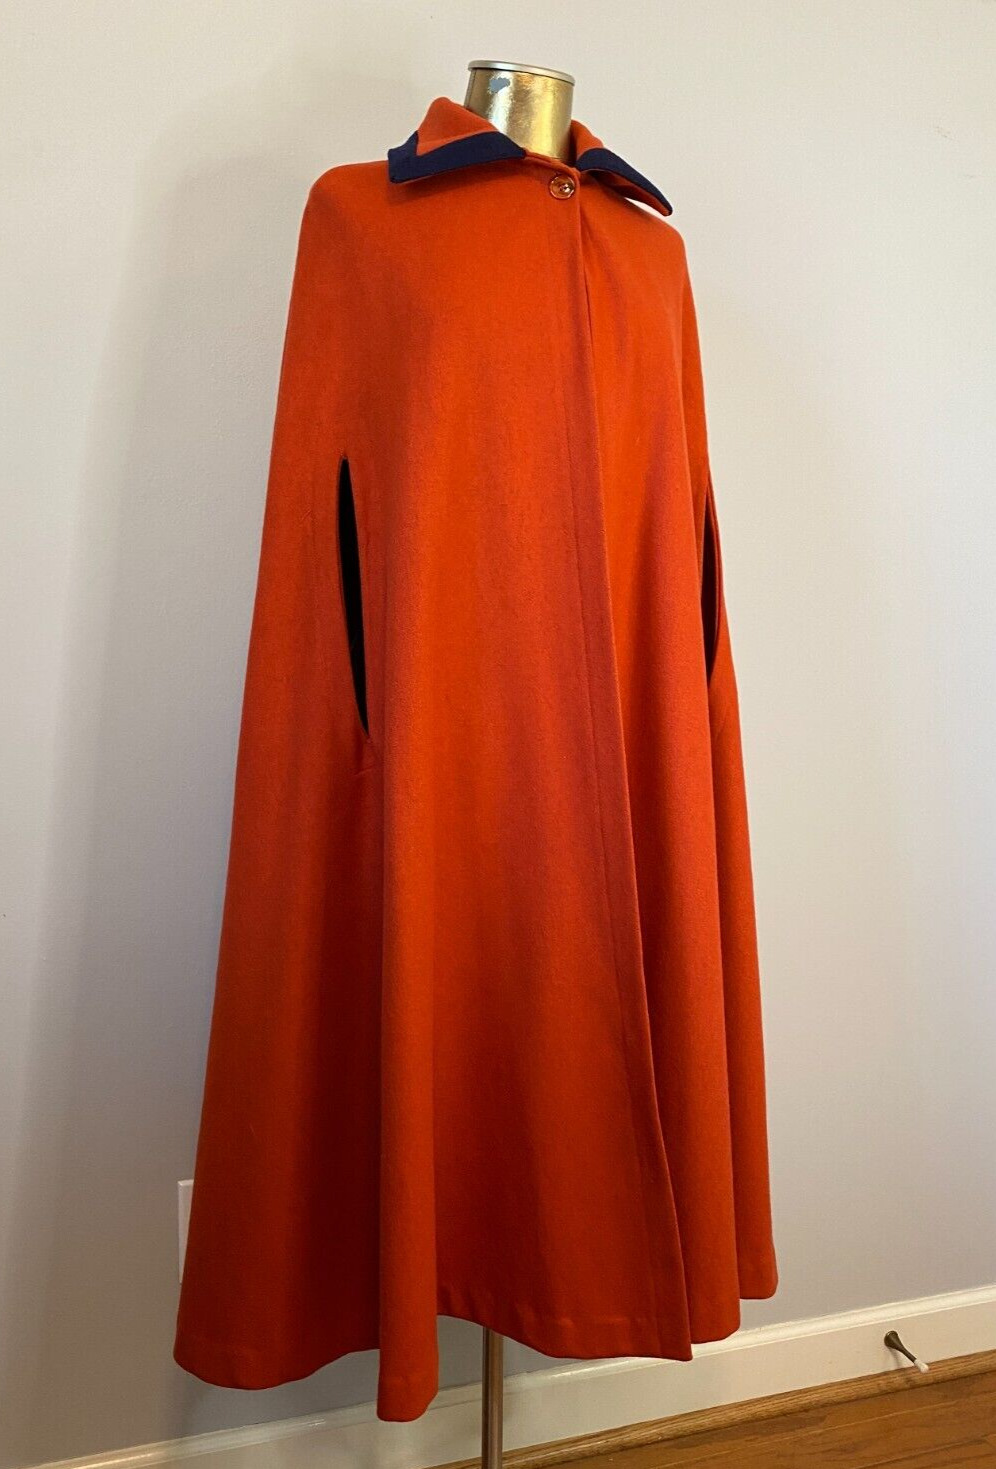 Vintage 70s LONG CAPE Emily M ORANGE Navy Collar MEDIUM Heavy Wool Mod Cloak